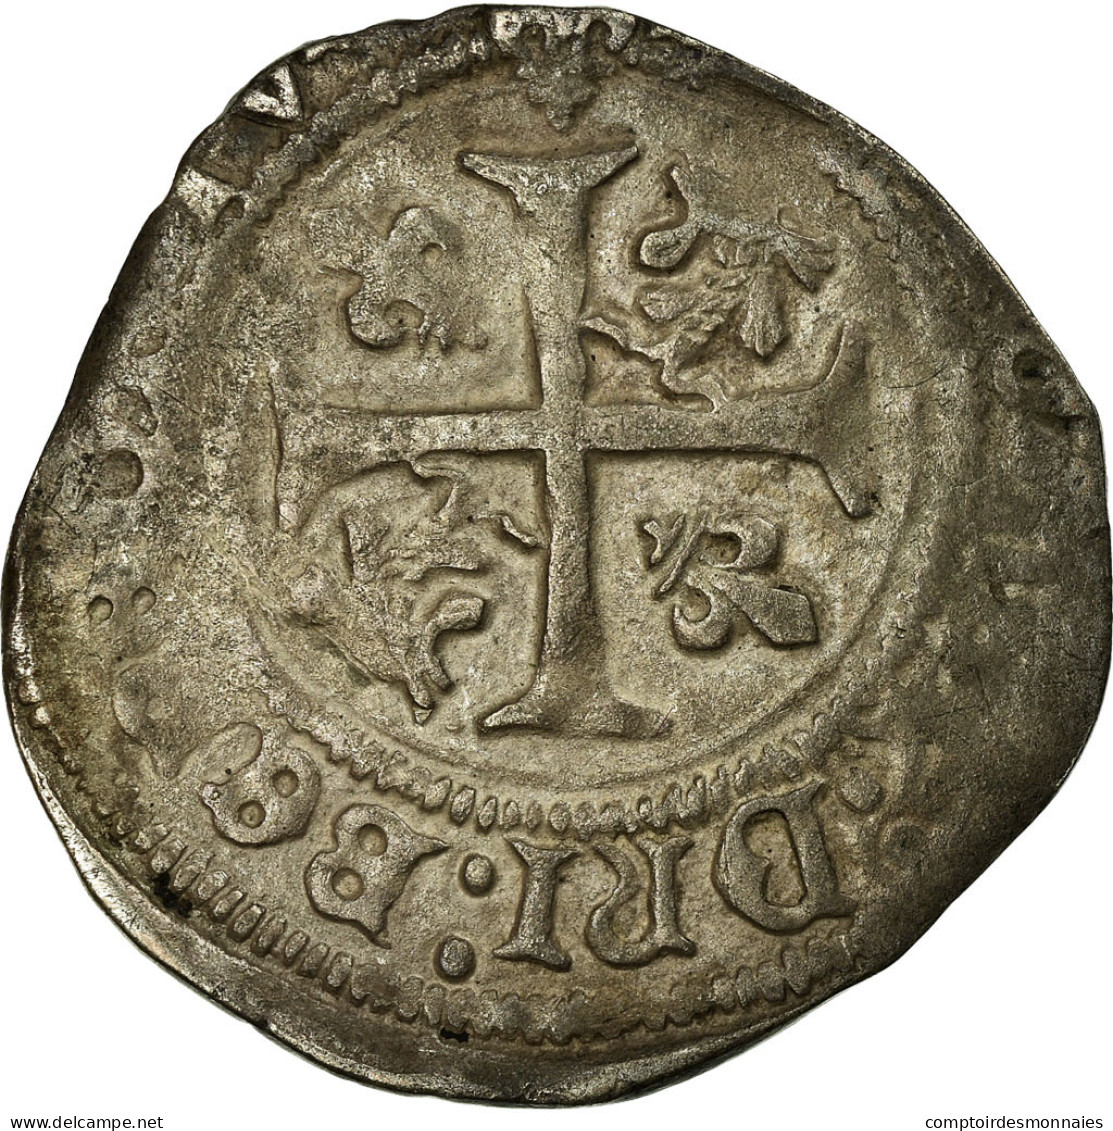 Monnaie, France, Dauphiné, Louis XII, Douzain, Grenoble, TB+, Billon - 1498-1515 Lodewijk XII